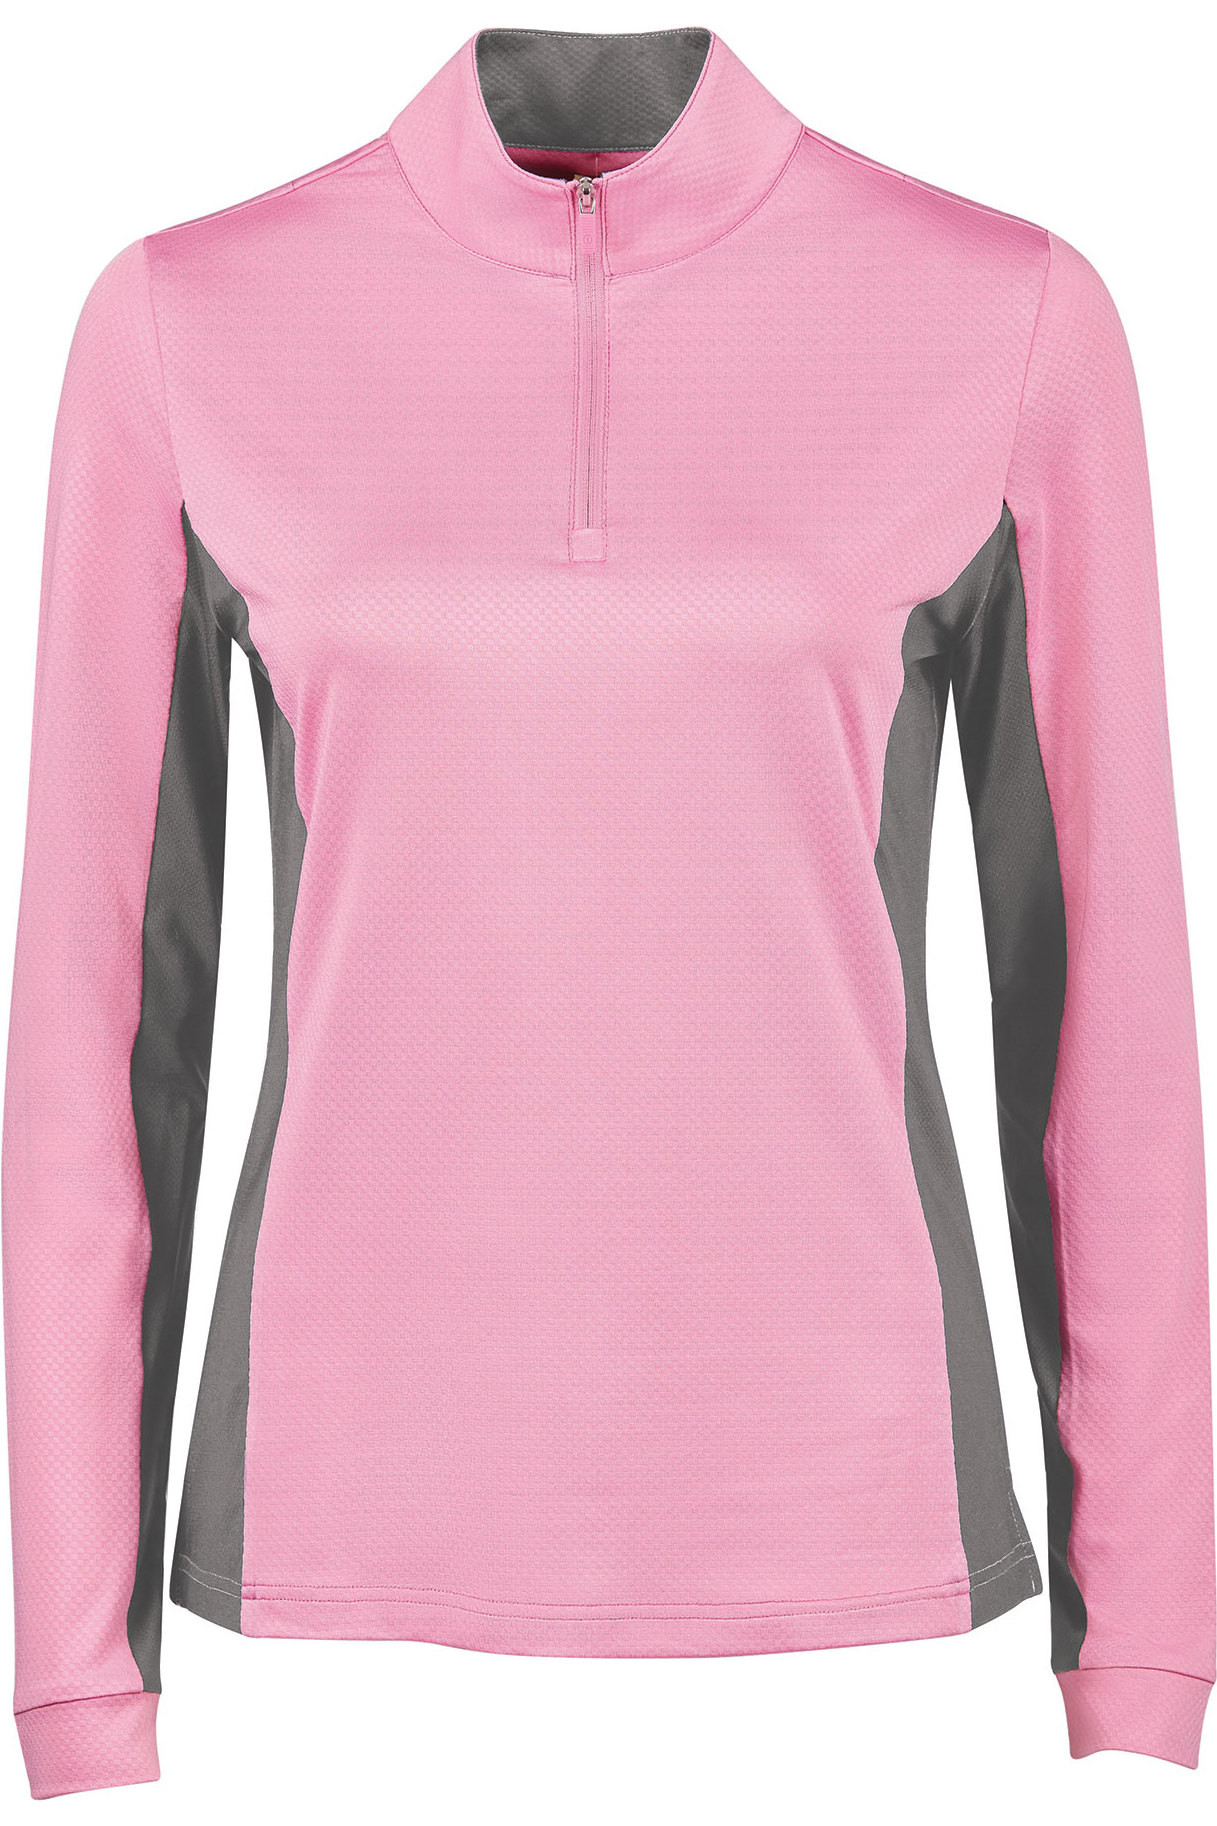 Long Sleeve Tech Top Riding Shirt Fuchsia Pink, X-Large CDT Dublin Airflow Comfort Dry